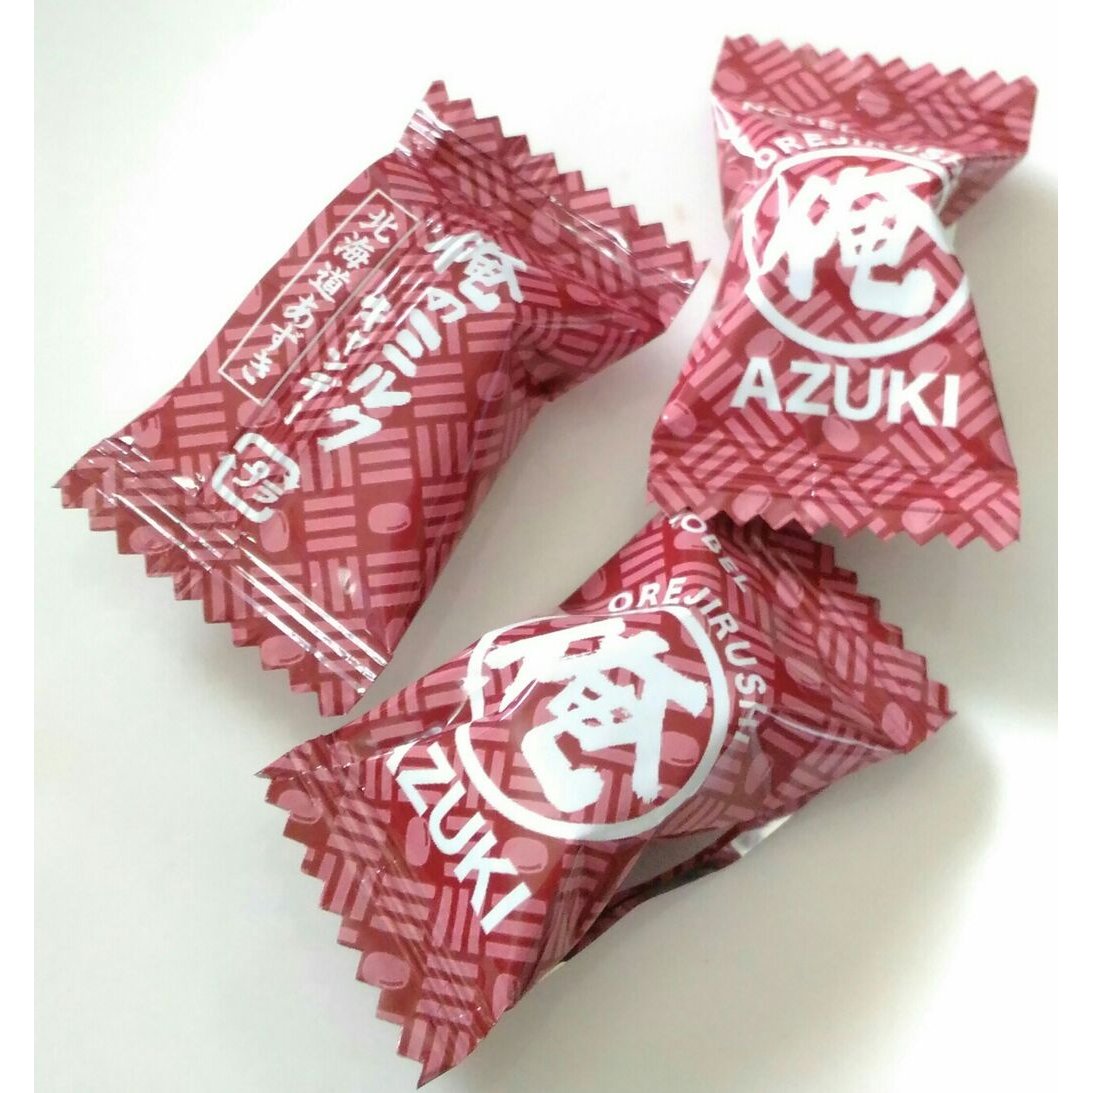 Nobel Ore no Milk Hokkaido Azuki Red Bean Candy 80g